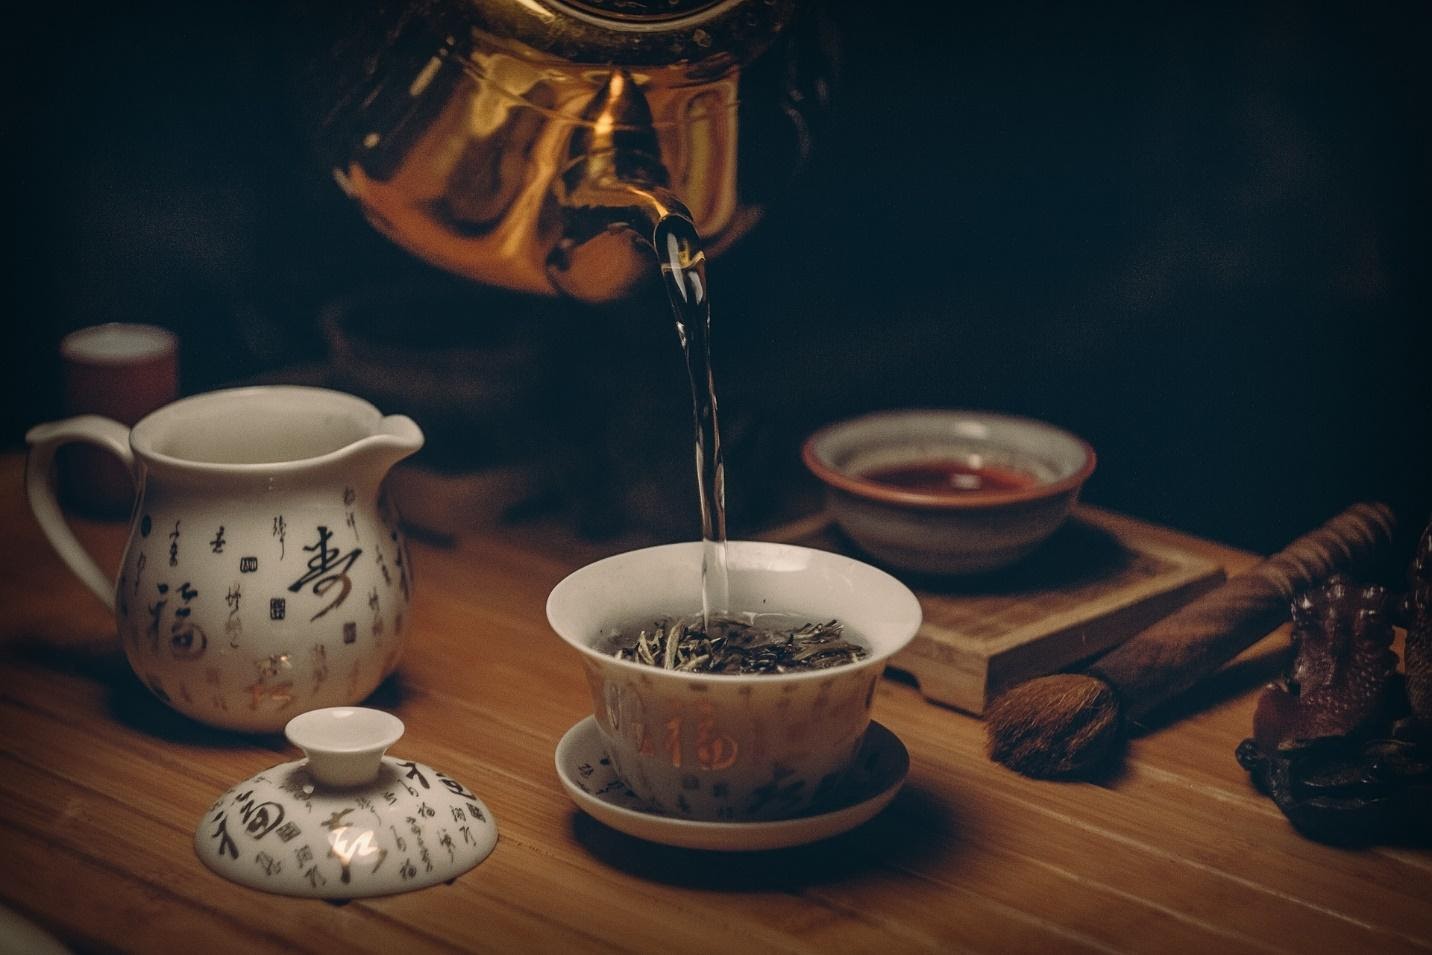 beauty benefits of green tea